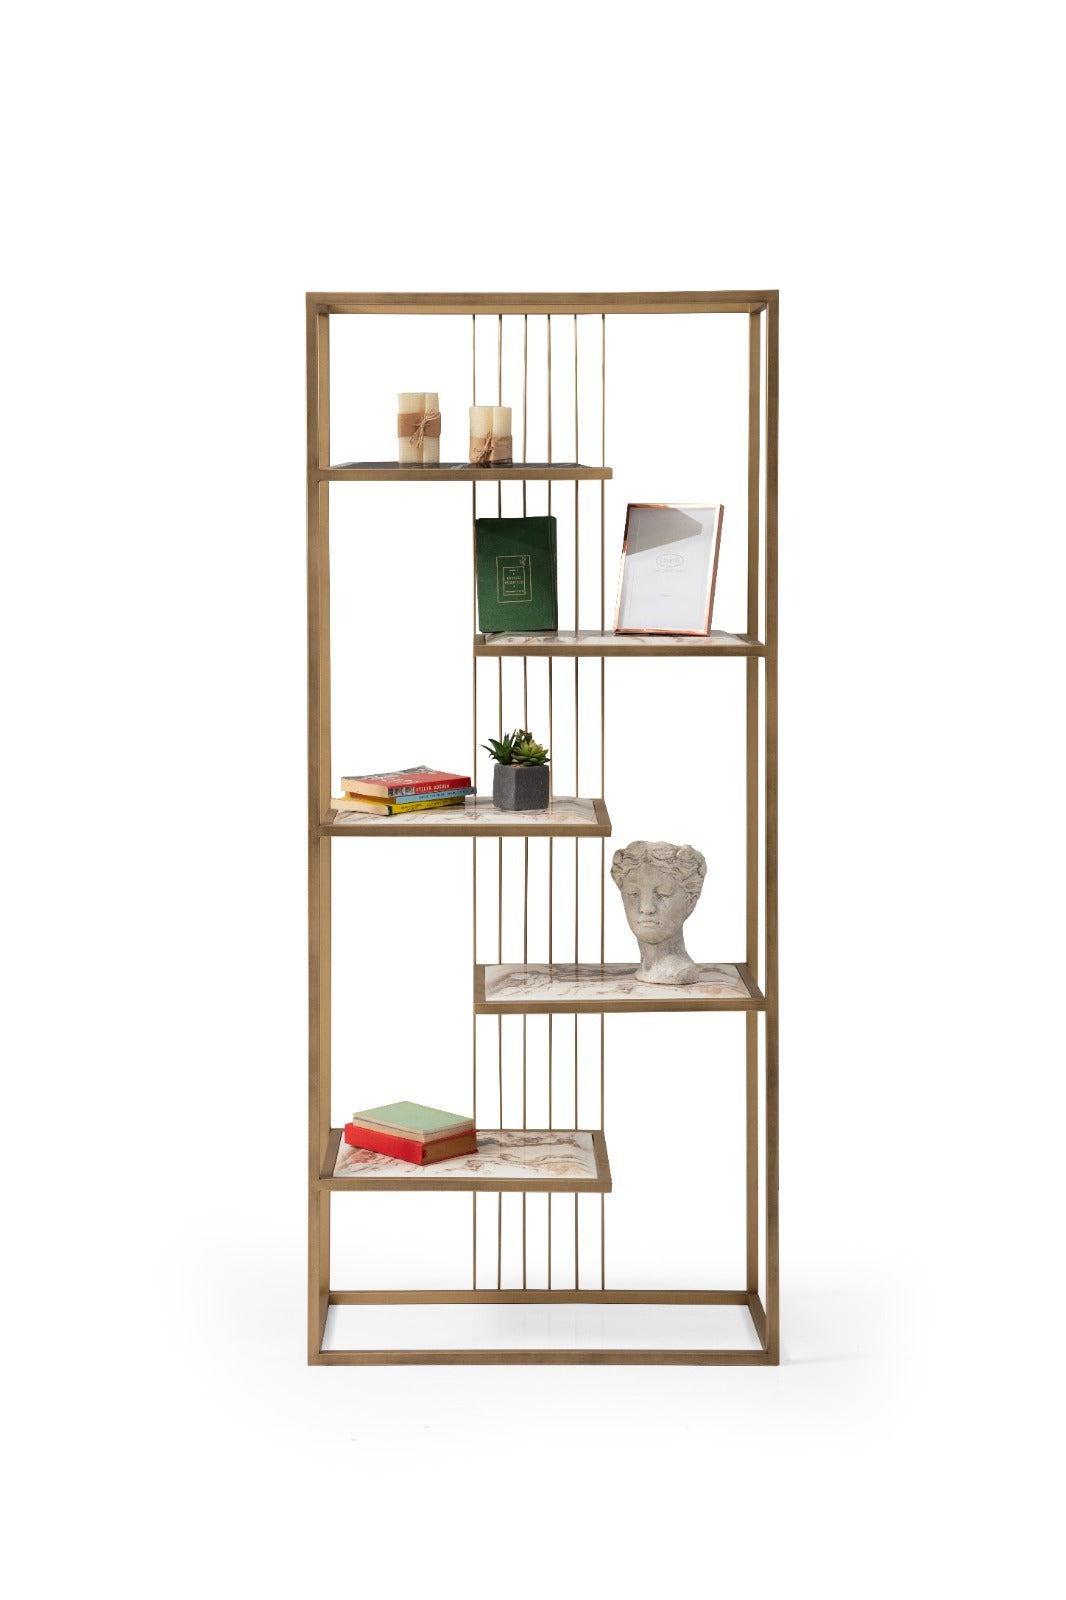 Artek Display Shelf by TabaHome